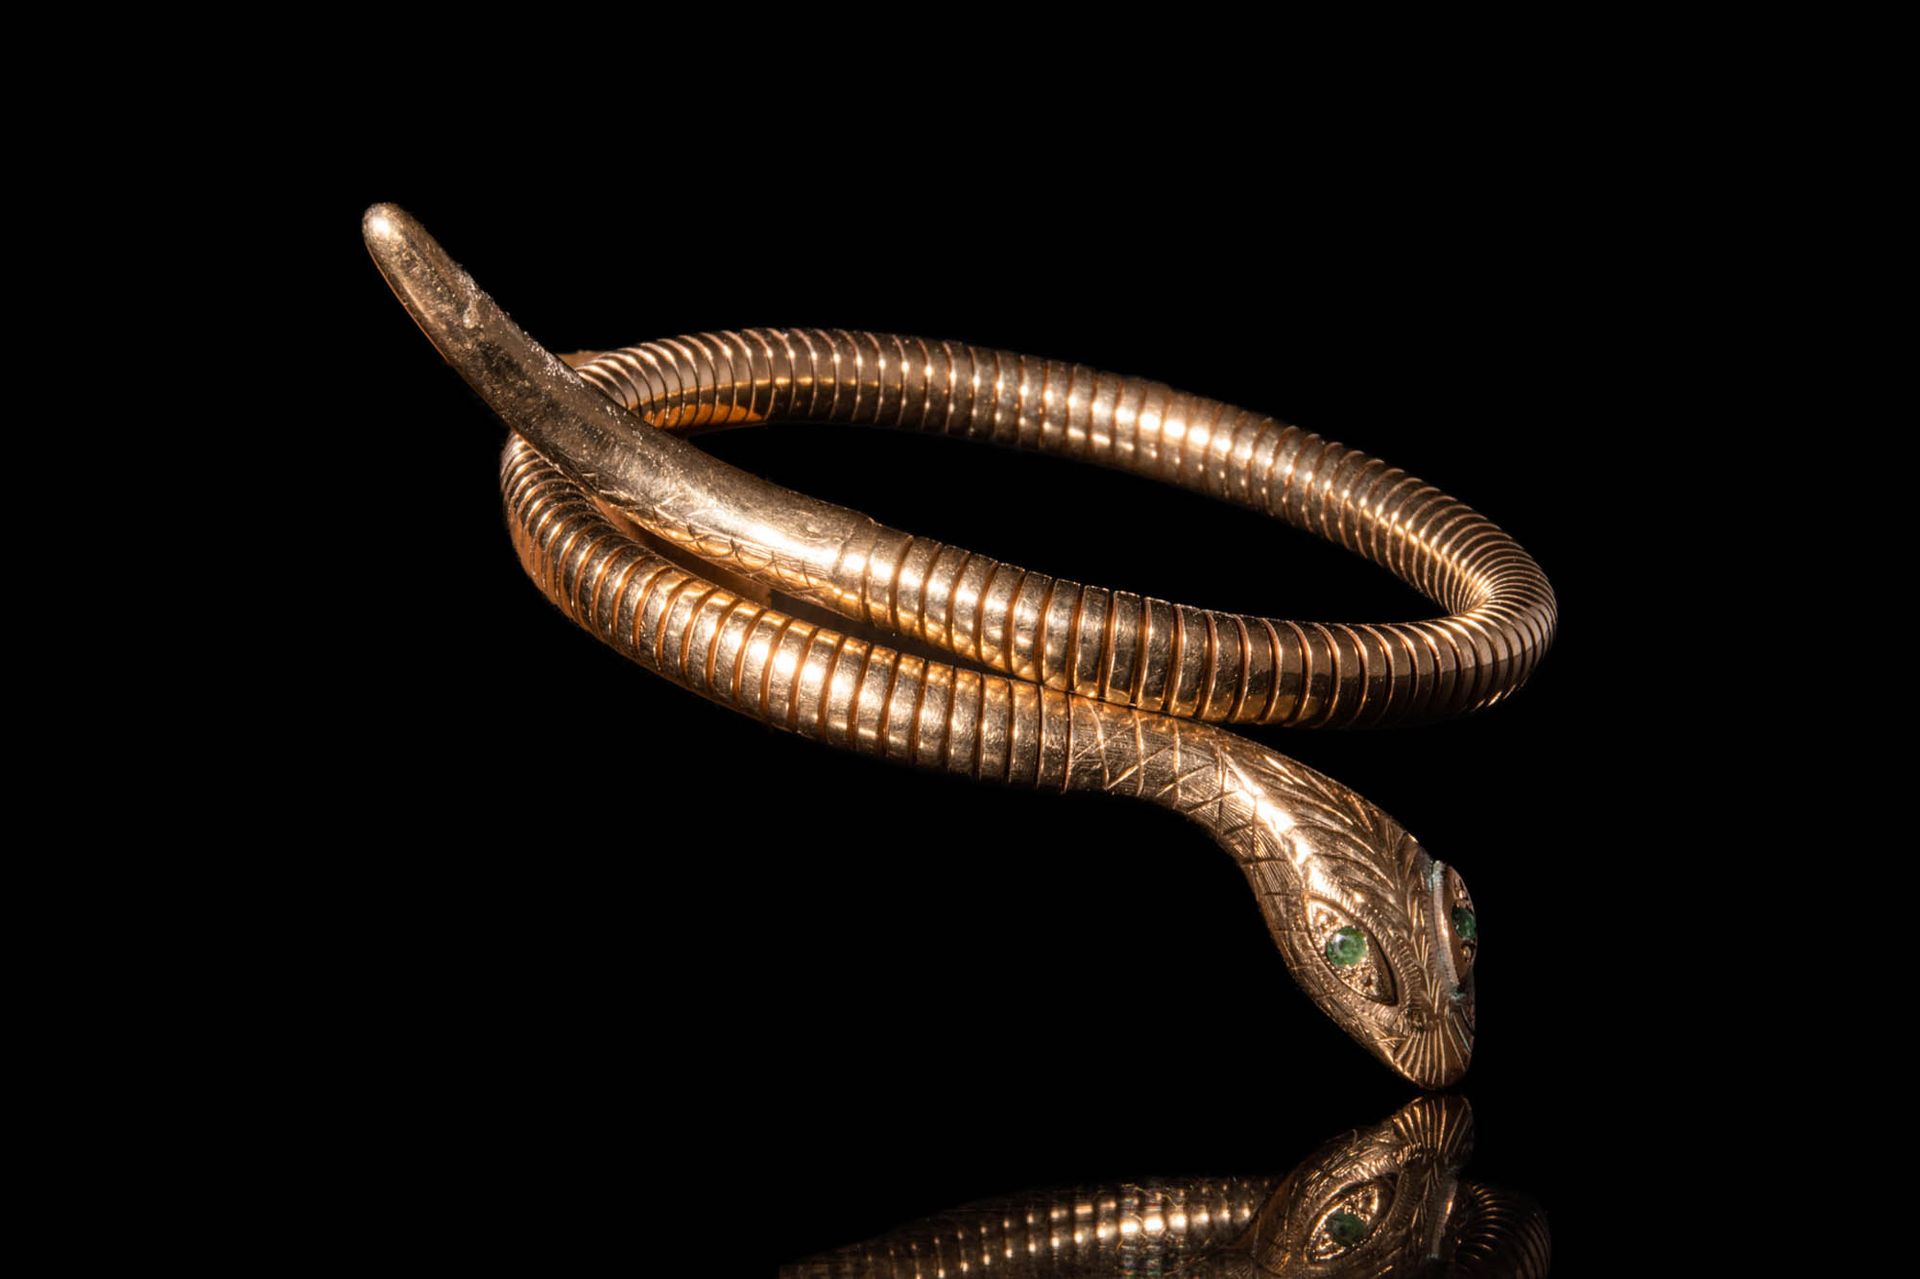 REVIVAL EGYPTIAN SNAKE SHAPED BRACELET .
埃及复兴时期的金手镯，蛇形镯身缠绕在一起。头部饰有鳞片，眼睛镶嵌祖母绿。 
尺&hellip;